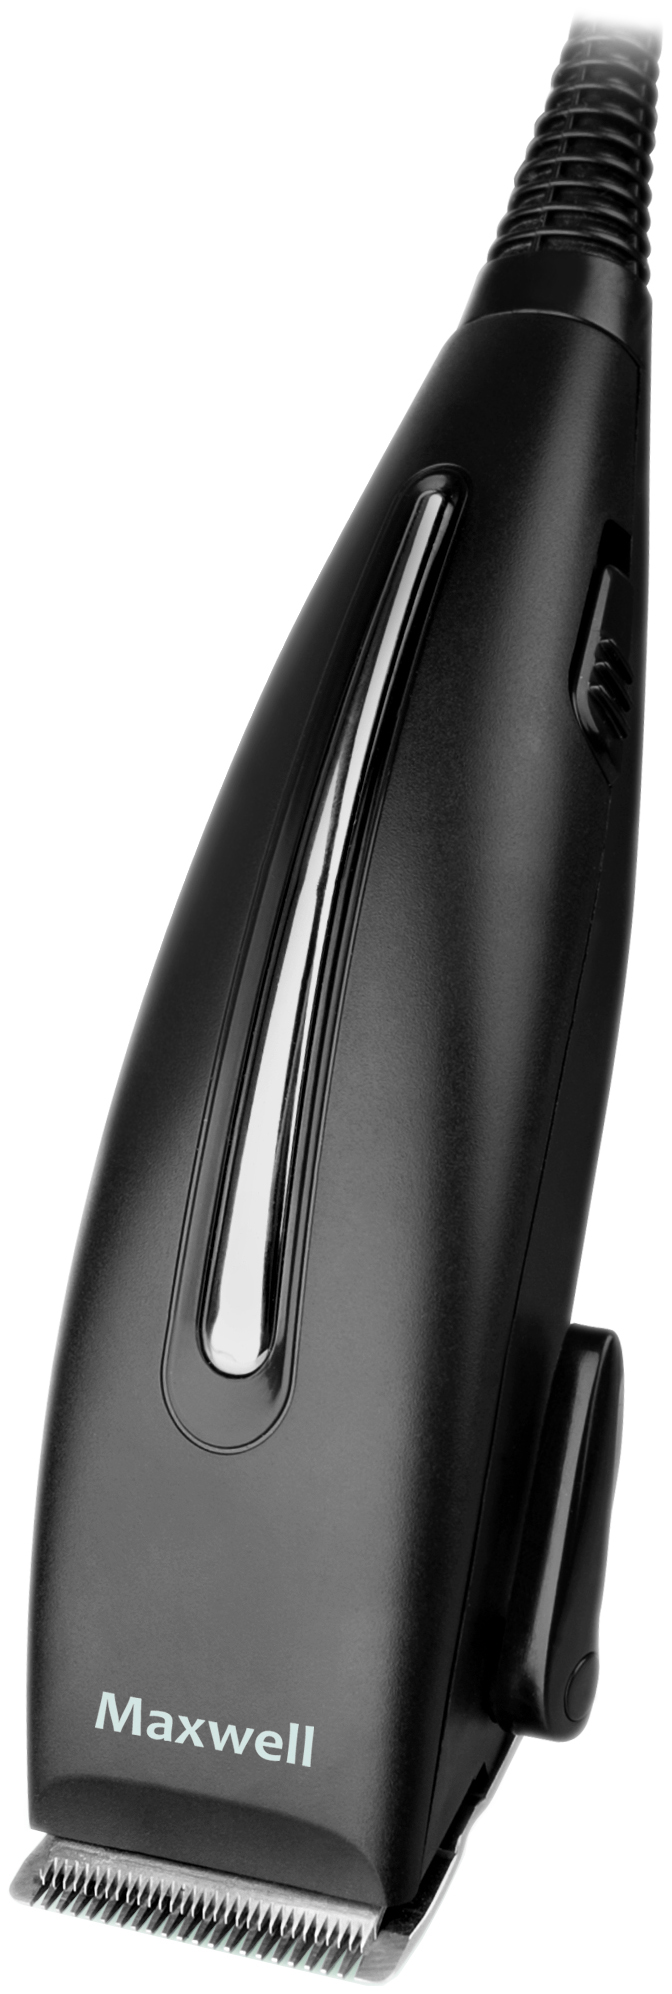 Машинка для стрижки волос Maxwell MW-2112 300мл салон пластиковые бутылки парикмахерскими лейка воды спрей для волос парикмахера инструмент стрижка спрейер тумана